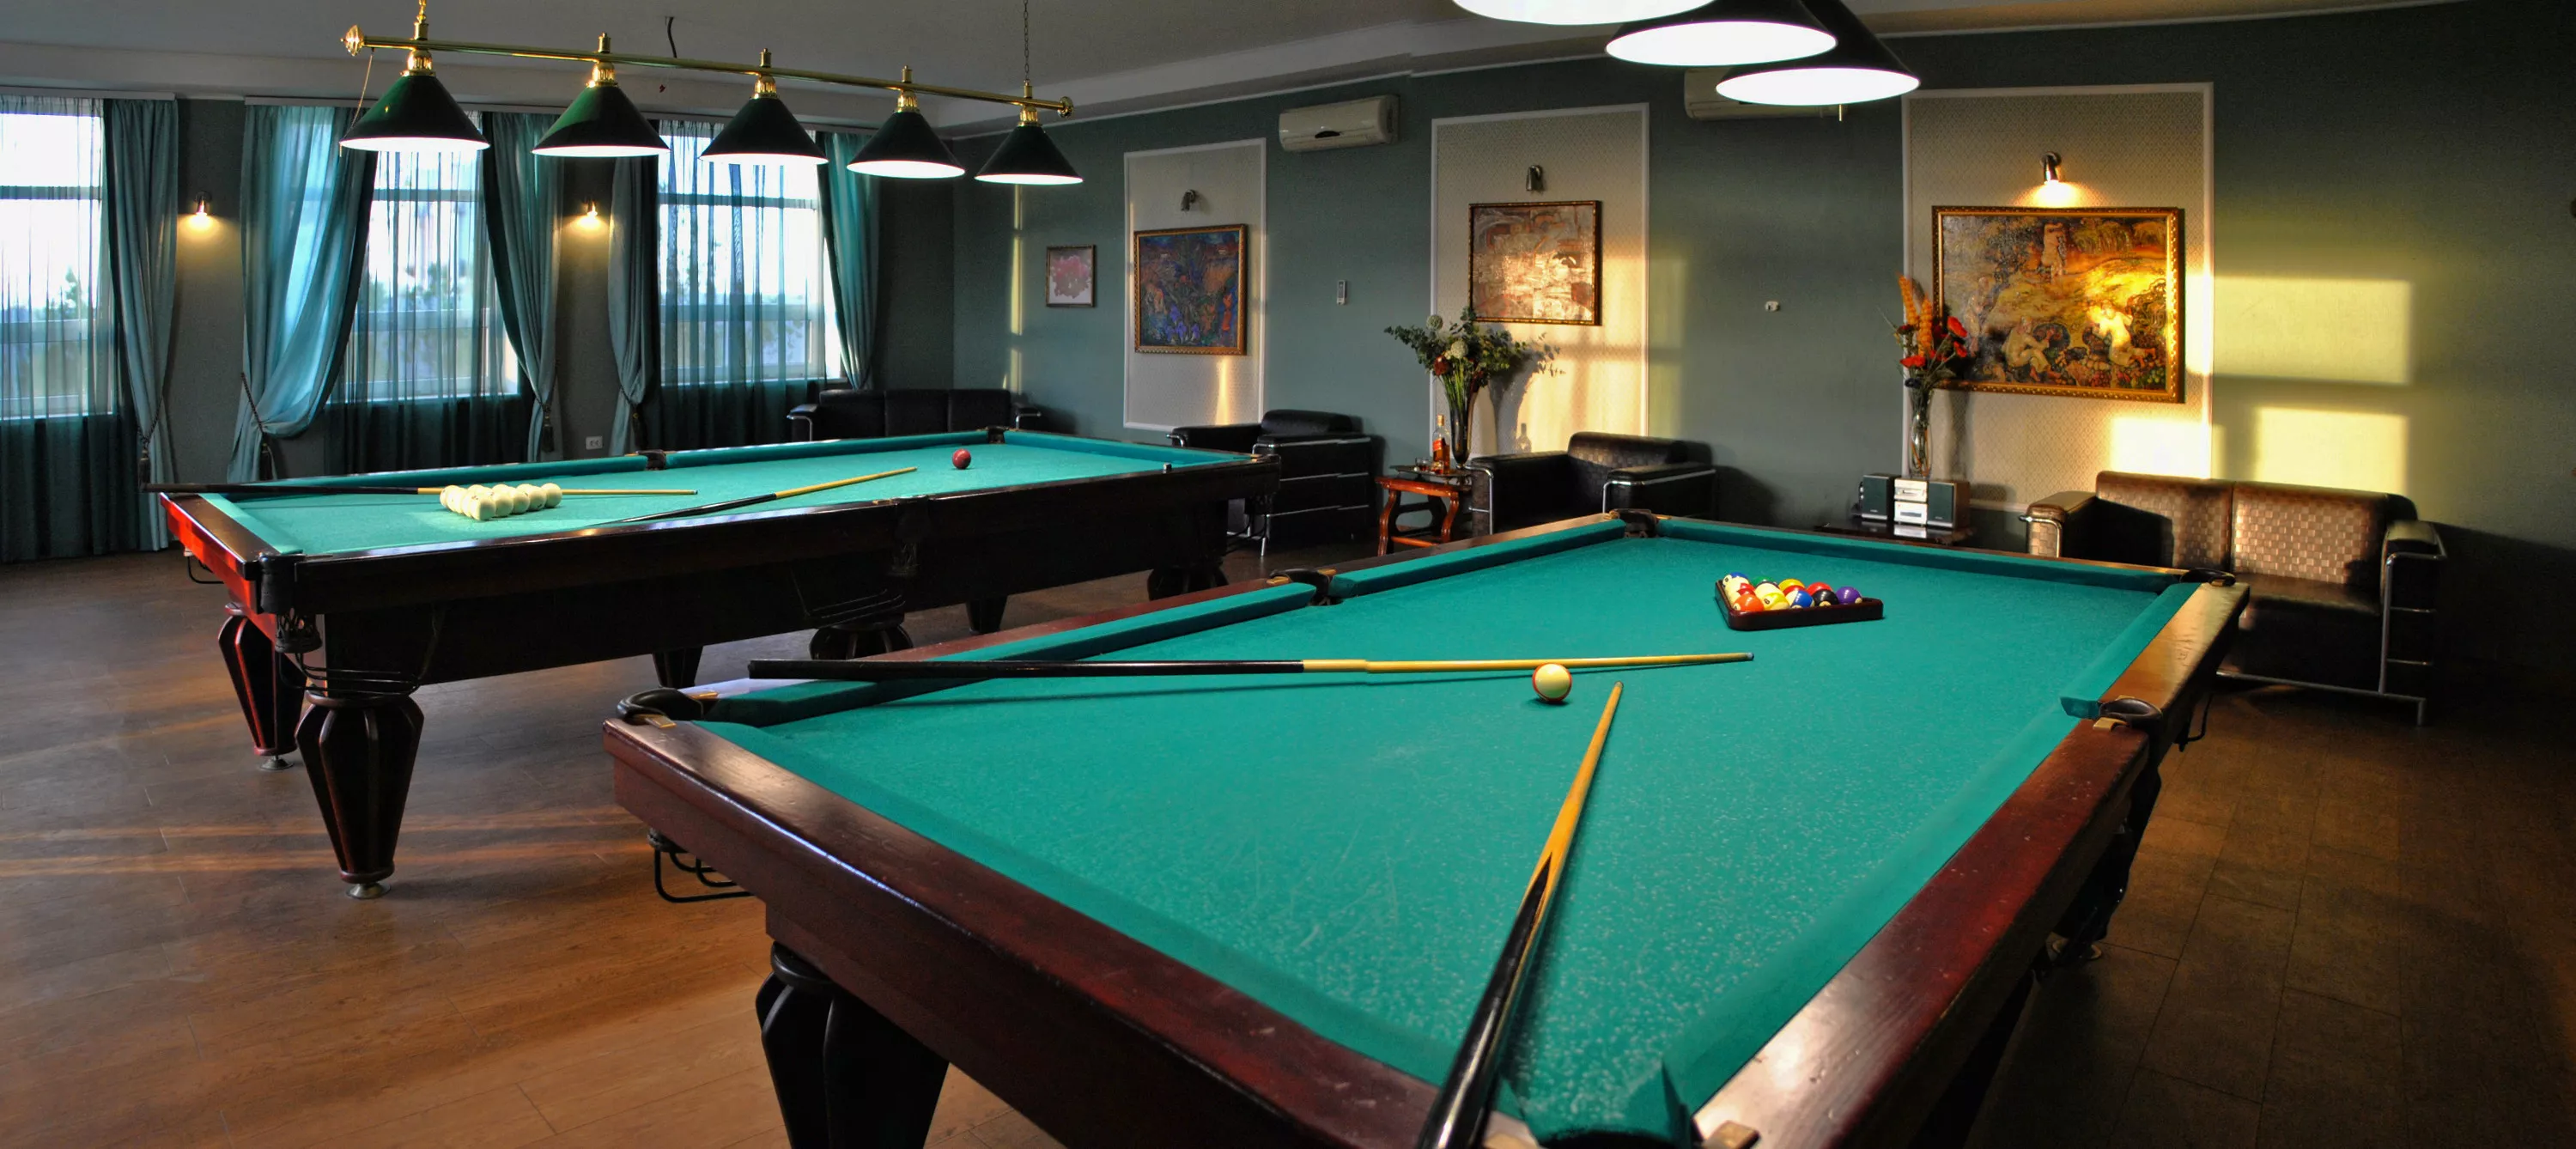 Billiard Room Fouli in Finland, Europe | Billiards - Rated 0.9